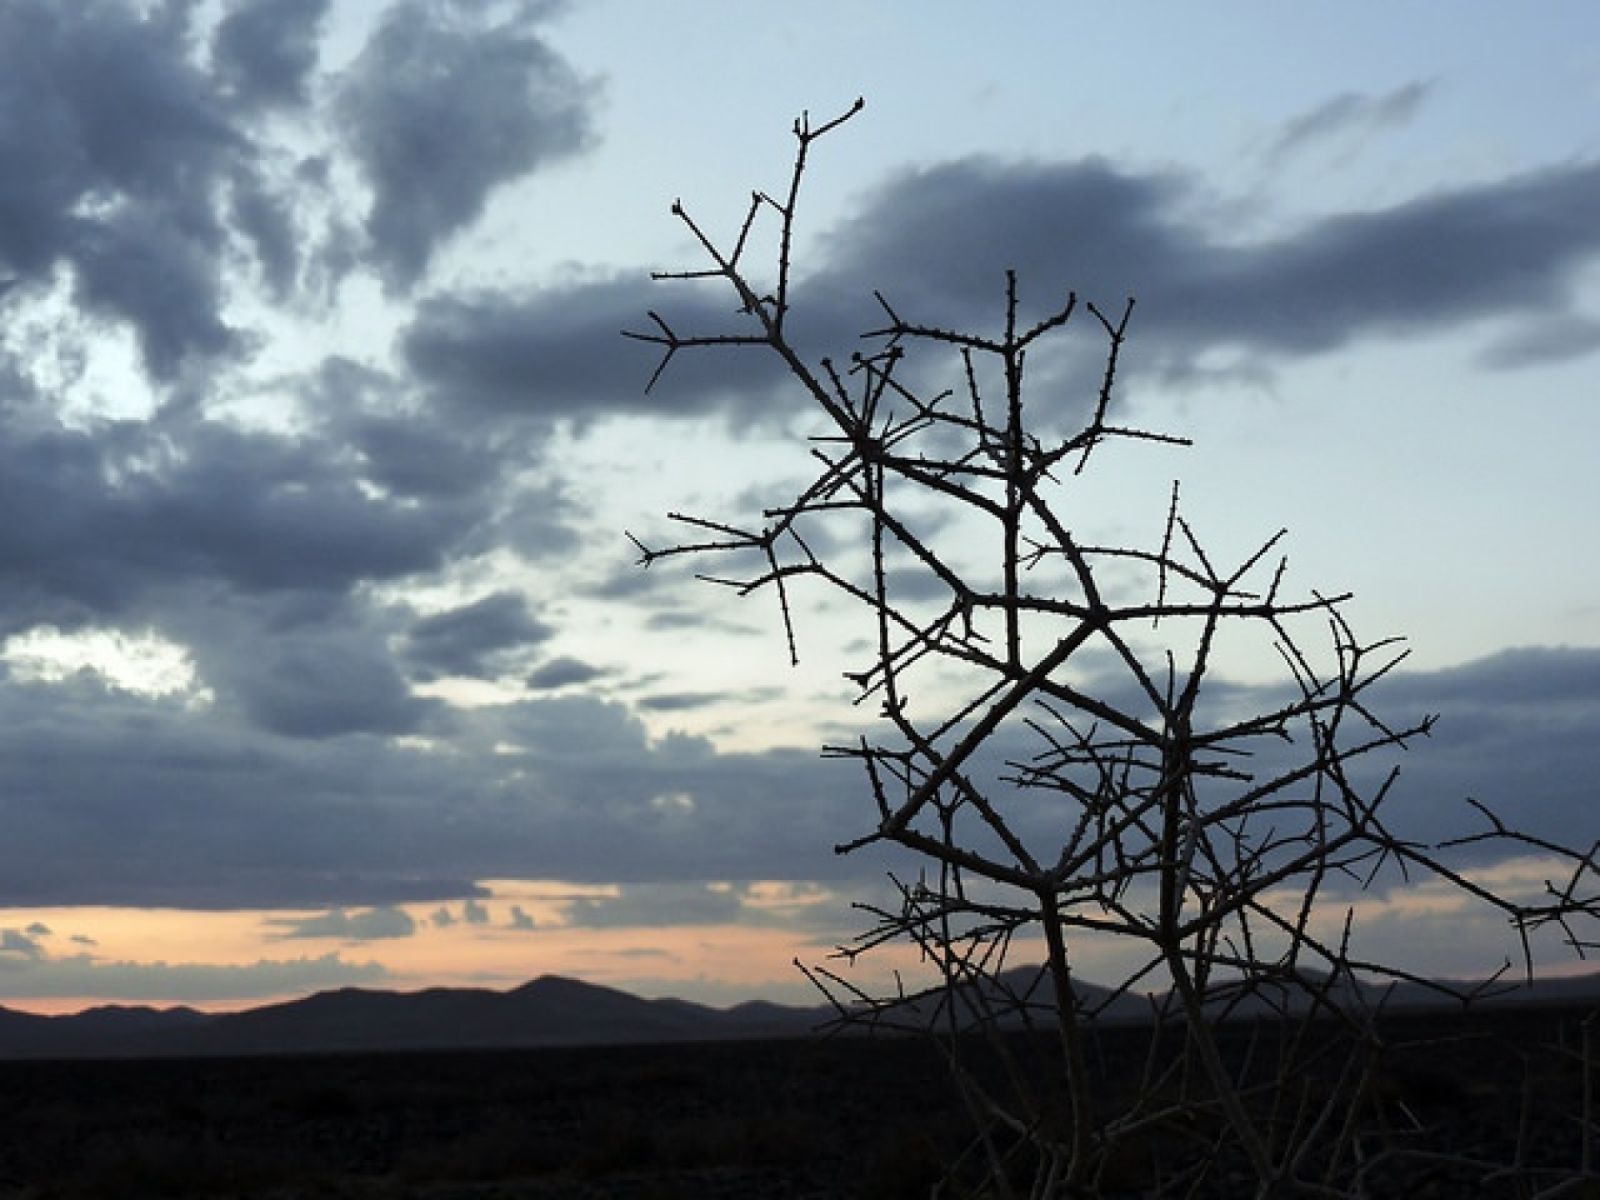 Namibia thorny bush